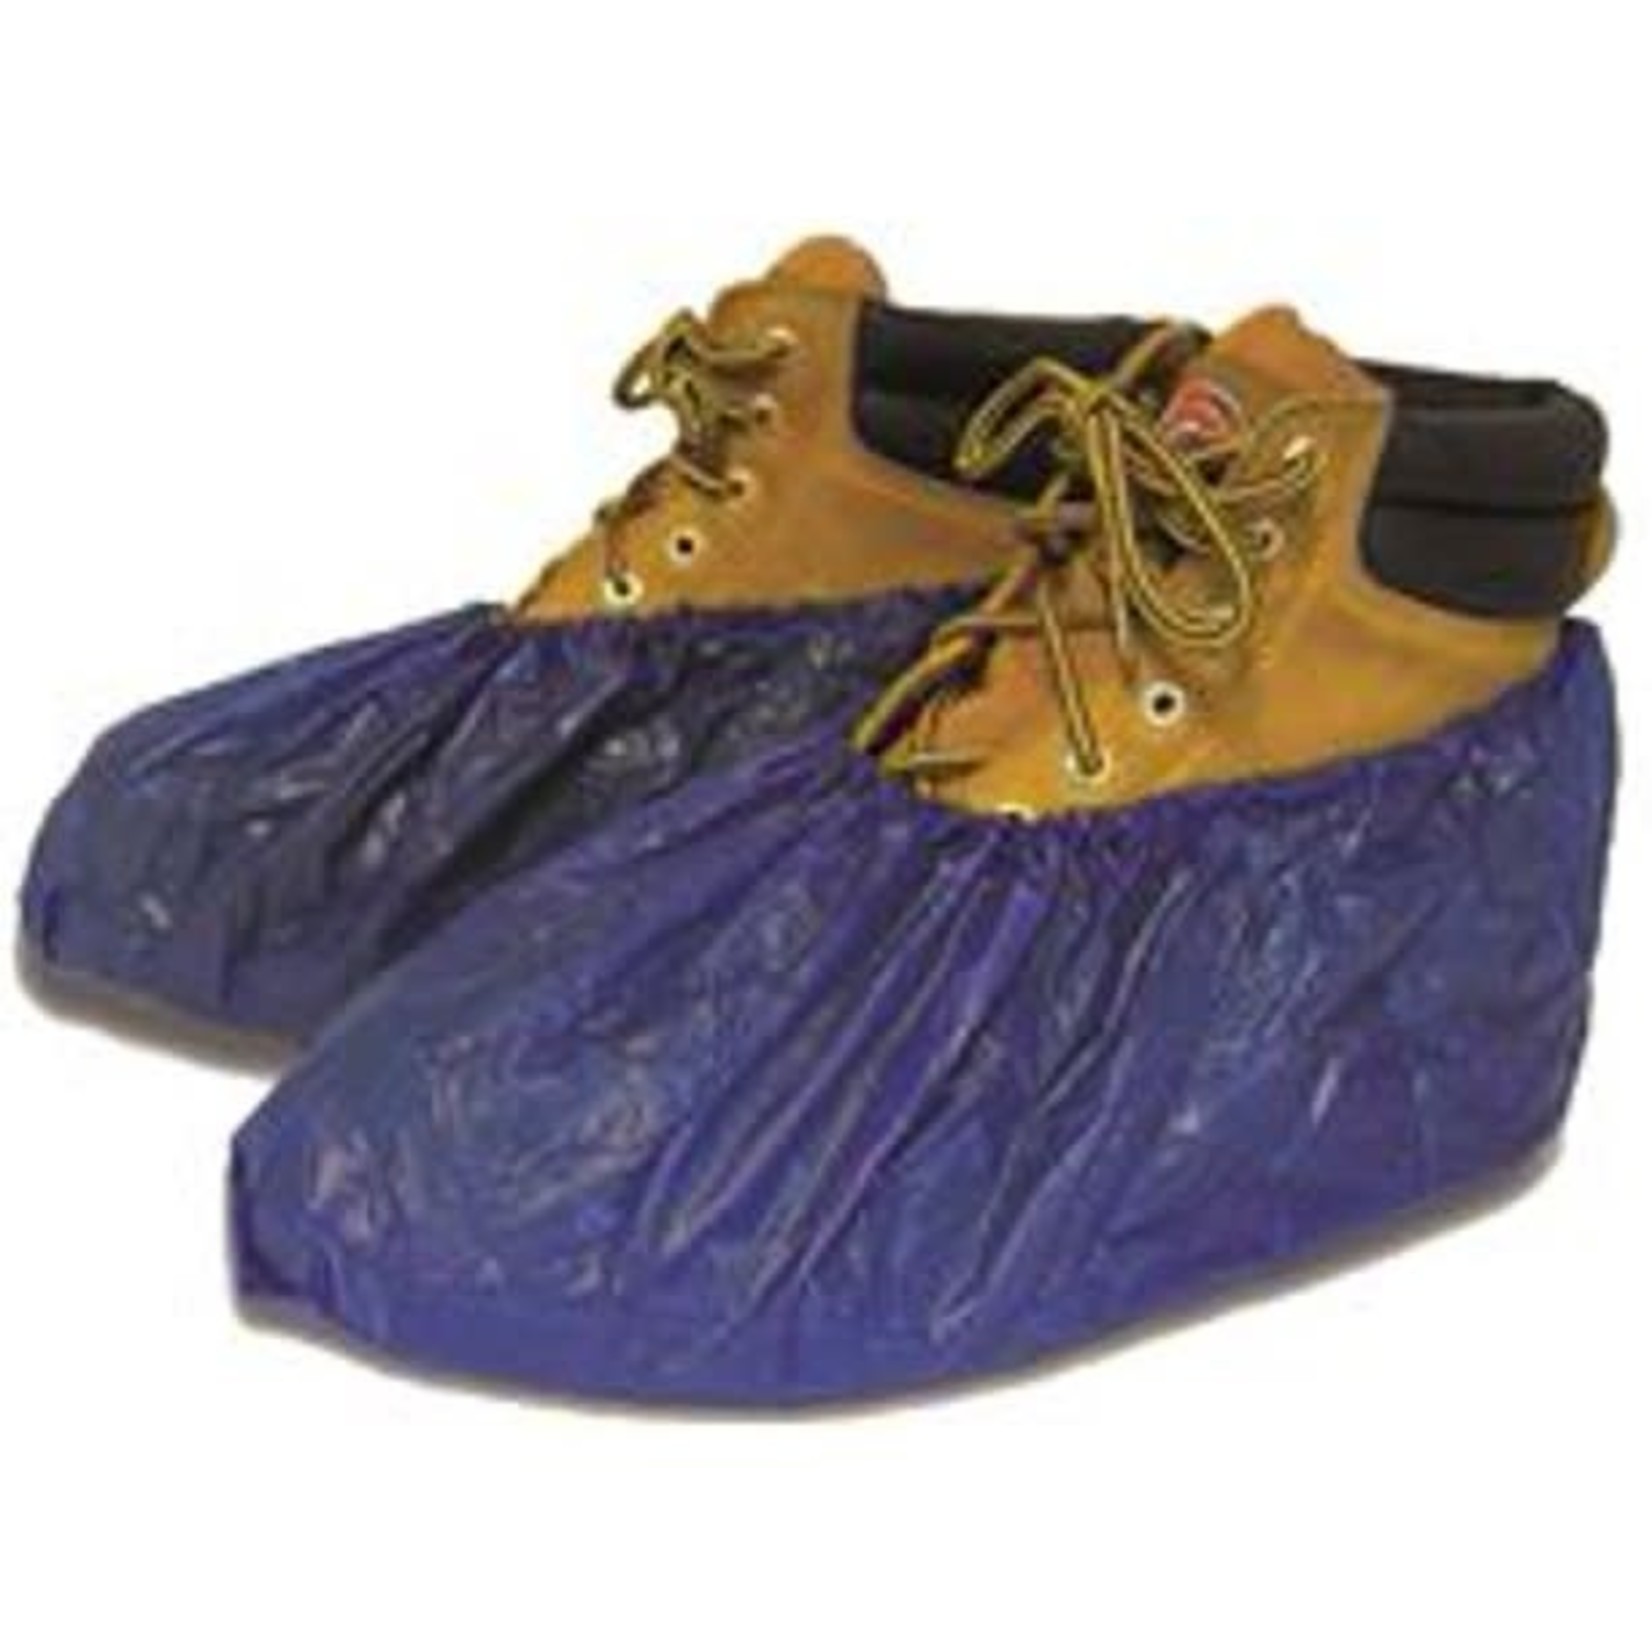 Shubee Shubee Water Proof Shoe Covers, Dark Blue (Box of 40)